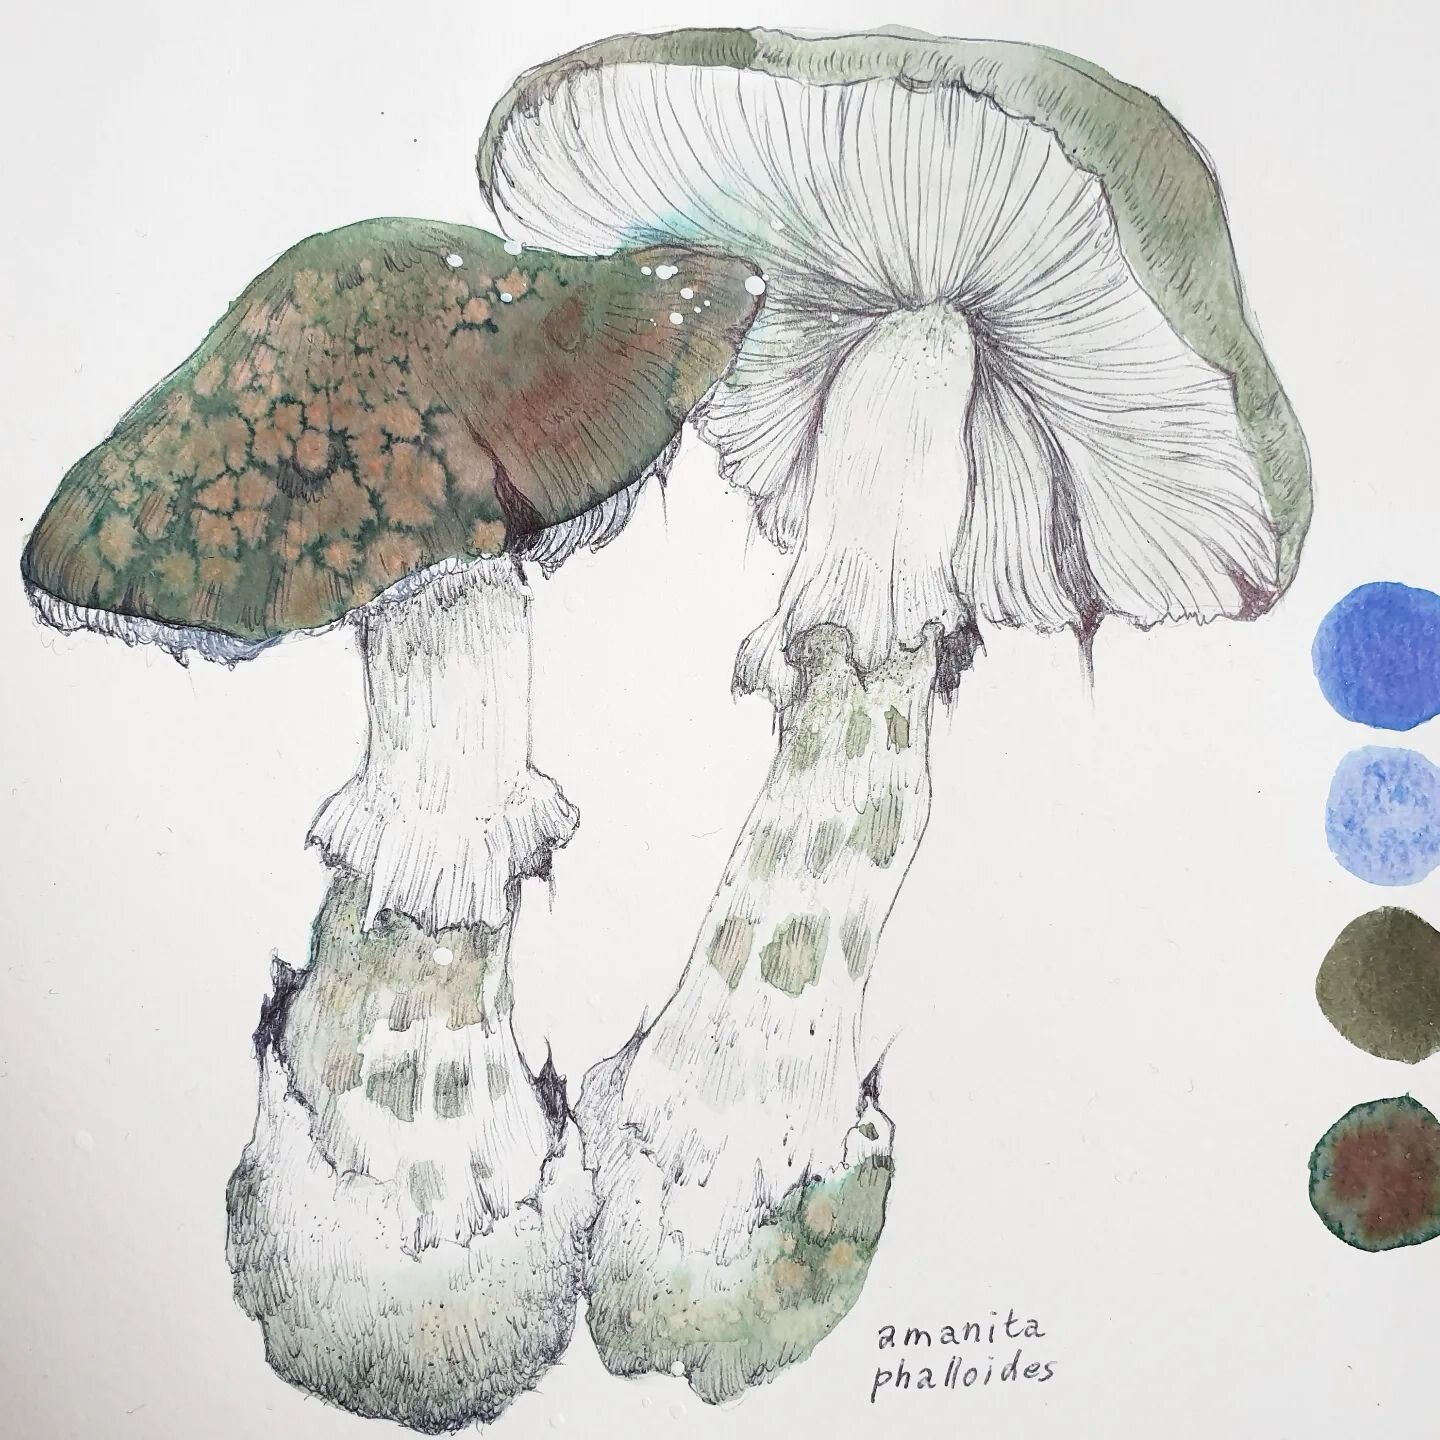 Mushroom study 
Ink x Ball pen 

#traditionalart #inkdrawing
#botanicalillustration #mushroomart